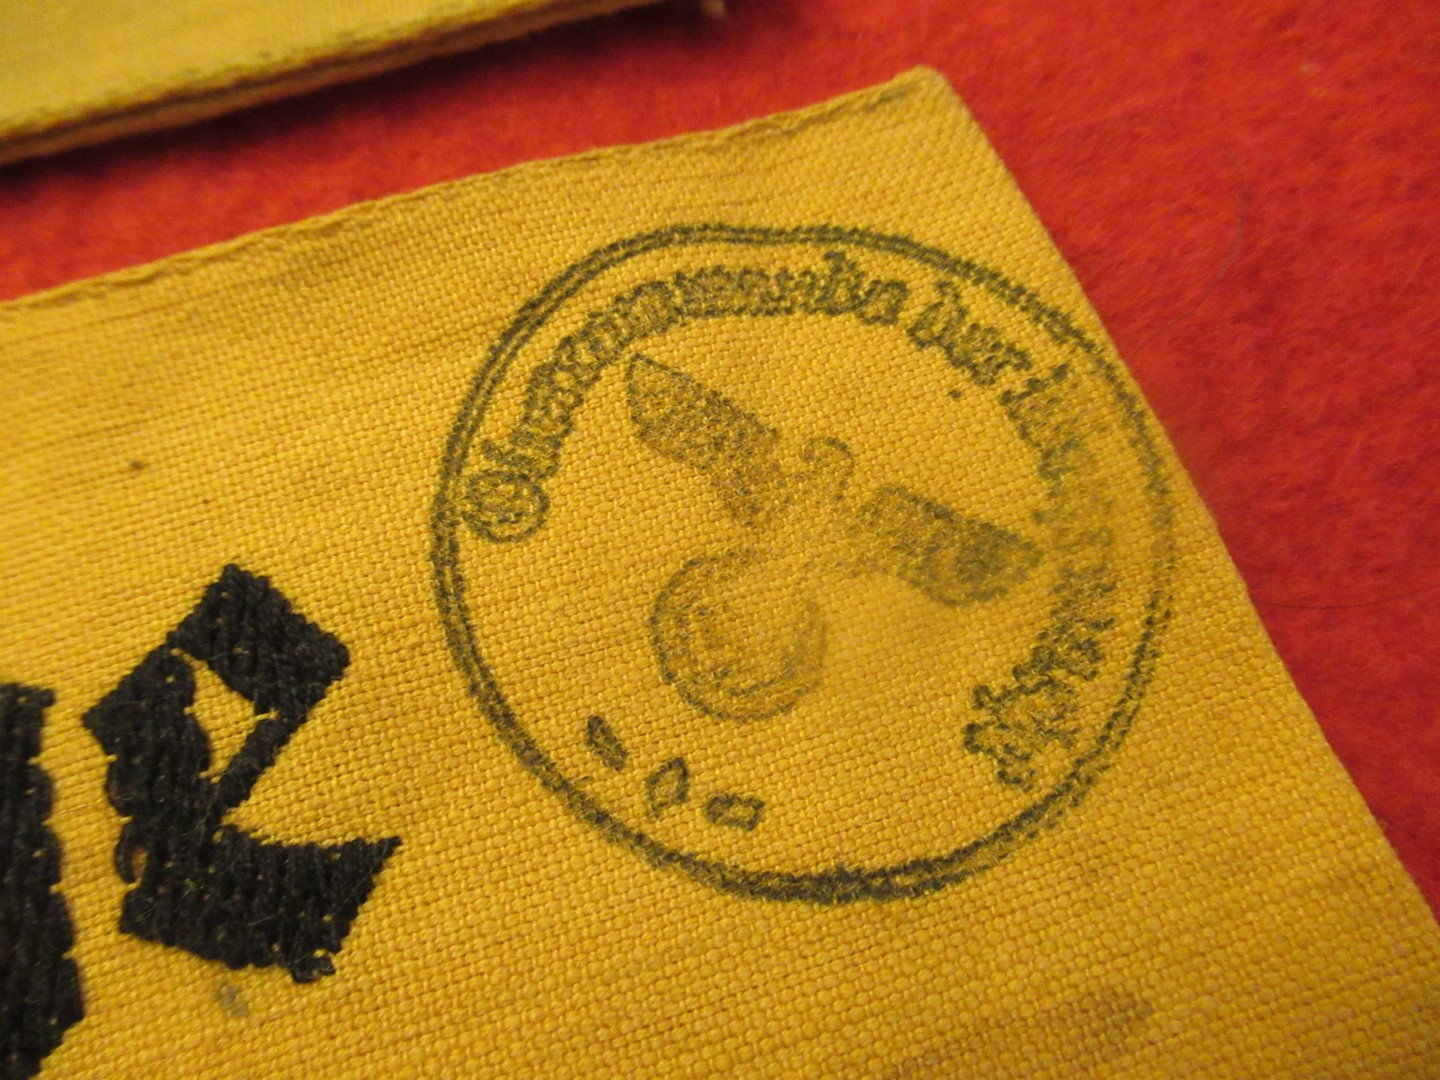 Deutsche Wehrmacht armbands with stamps